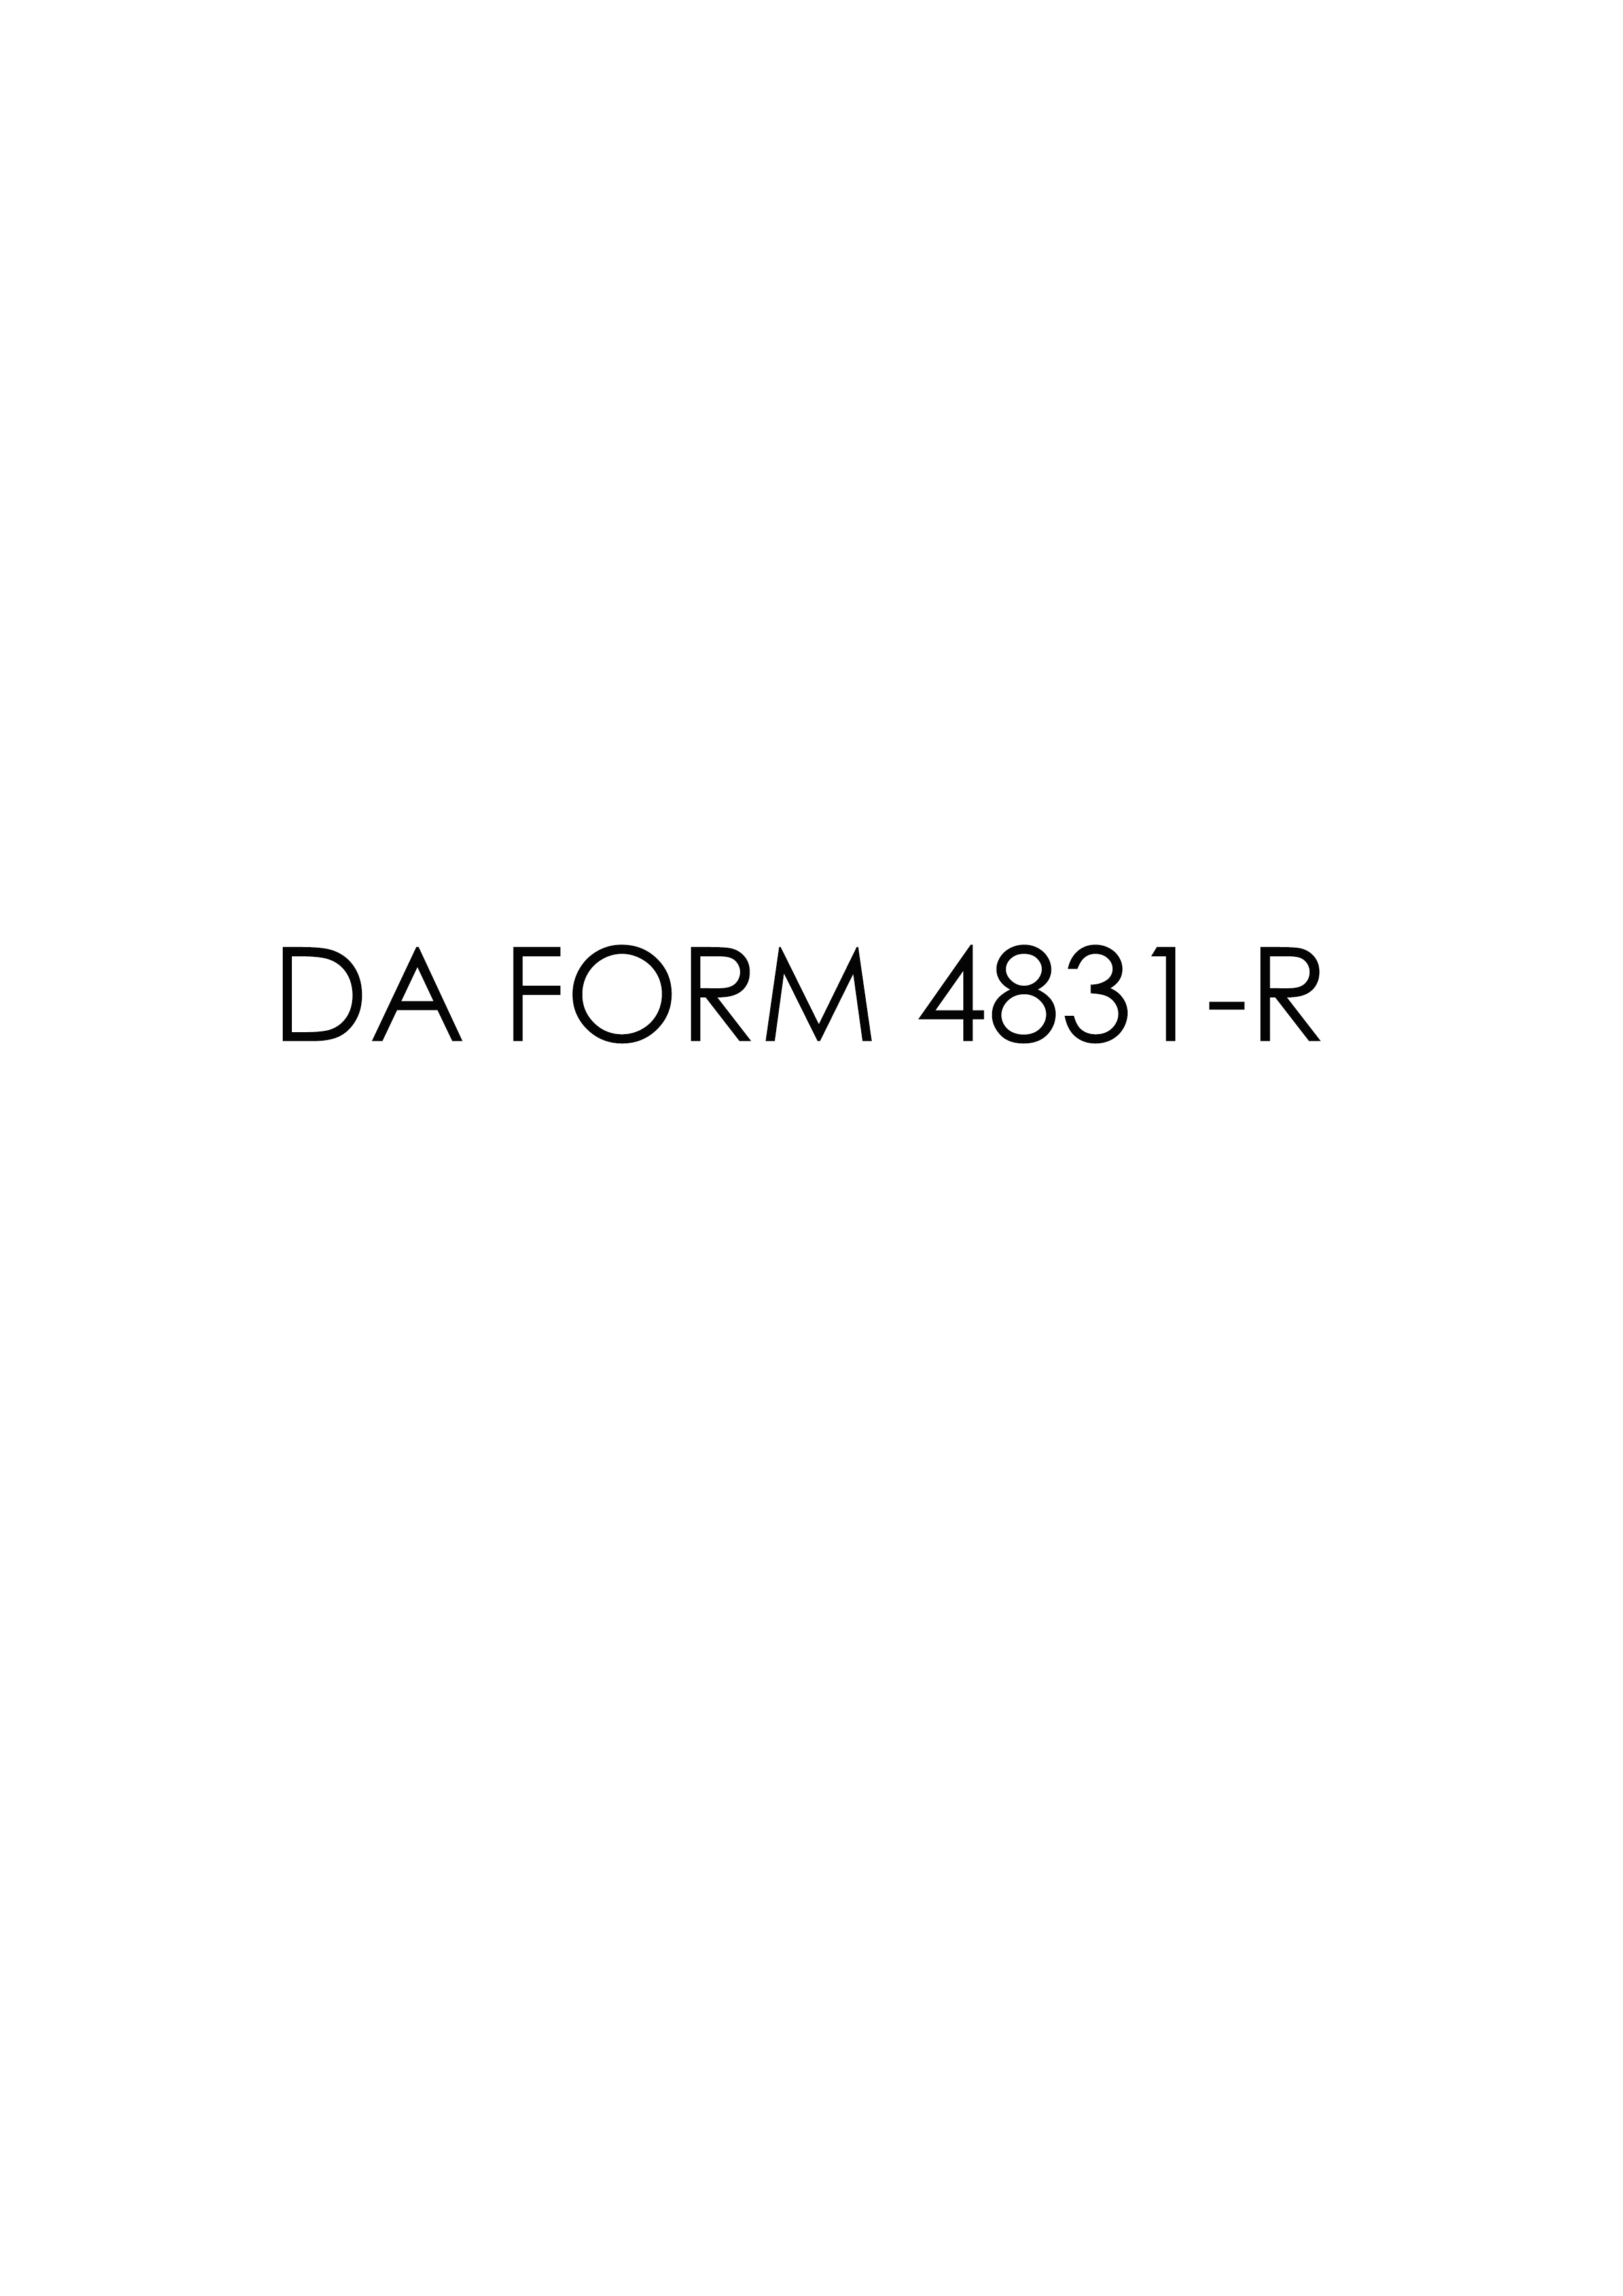 da Form 4831-R fillable